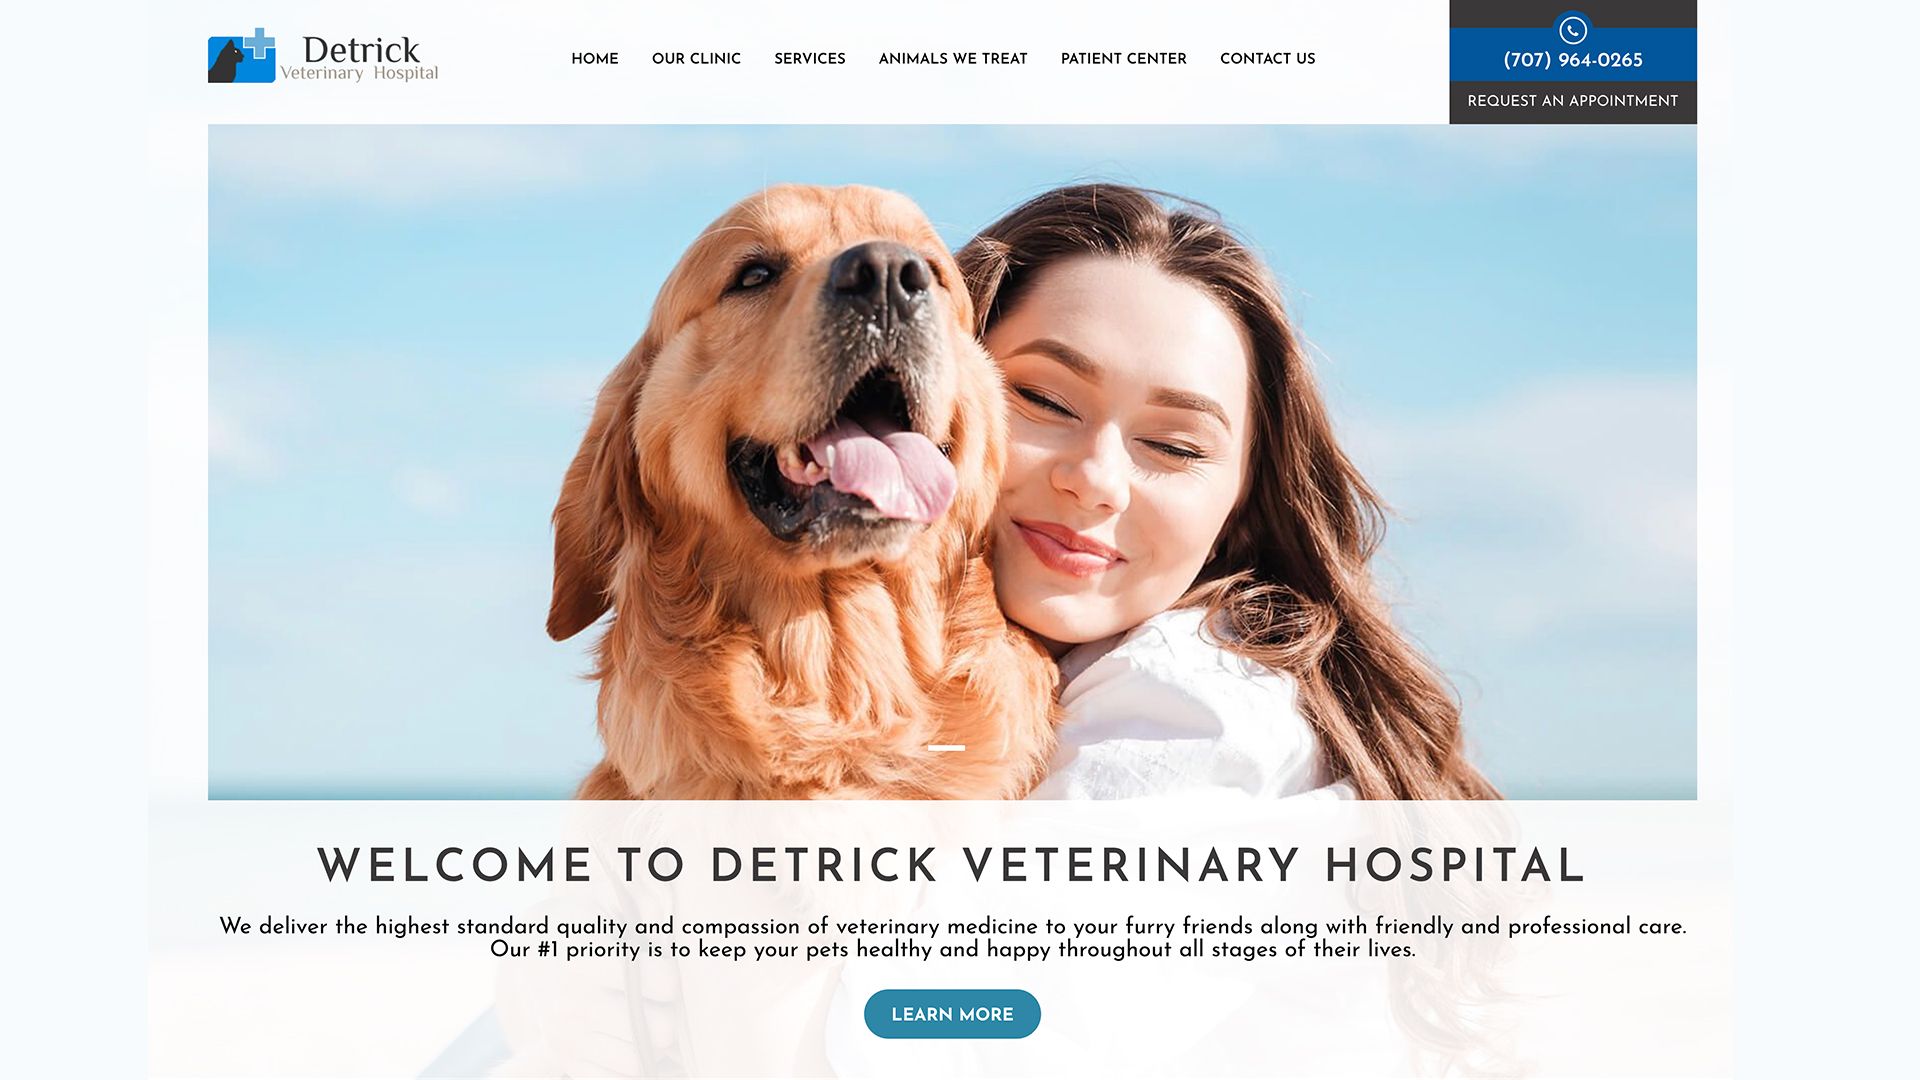 Detrick Veterinary Hospital